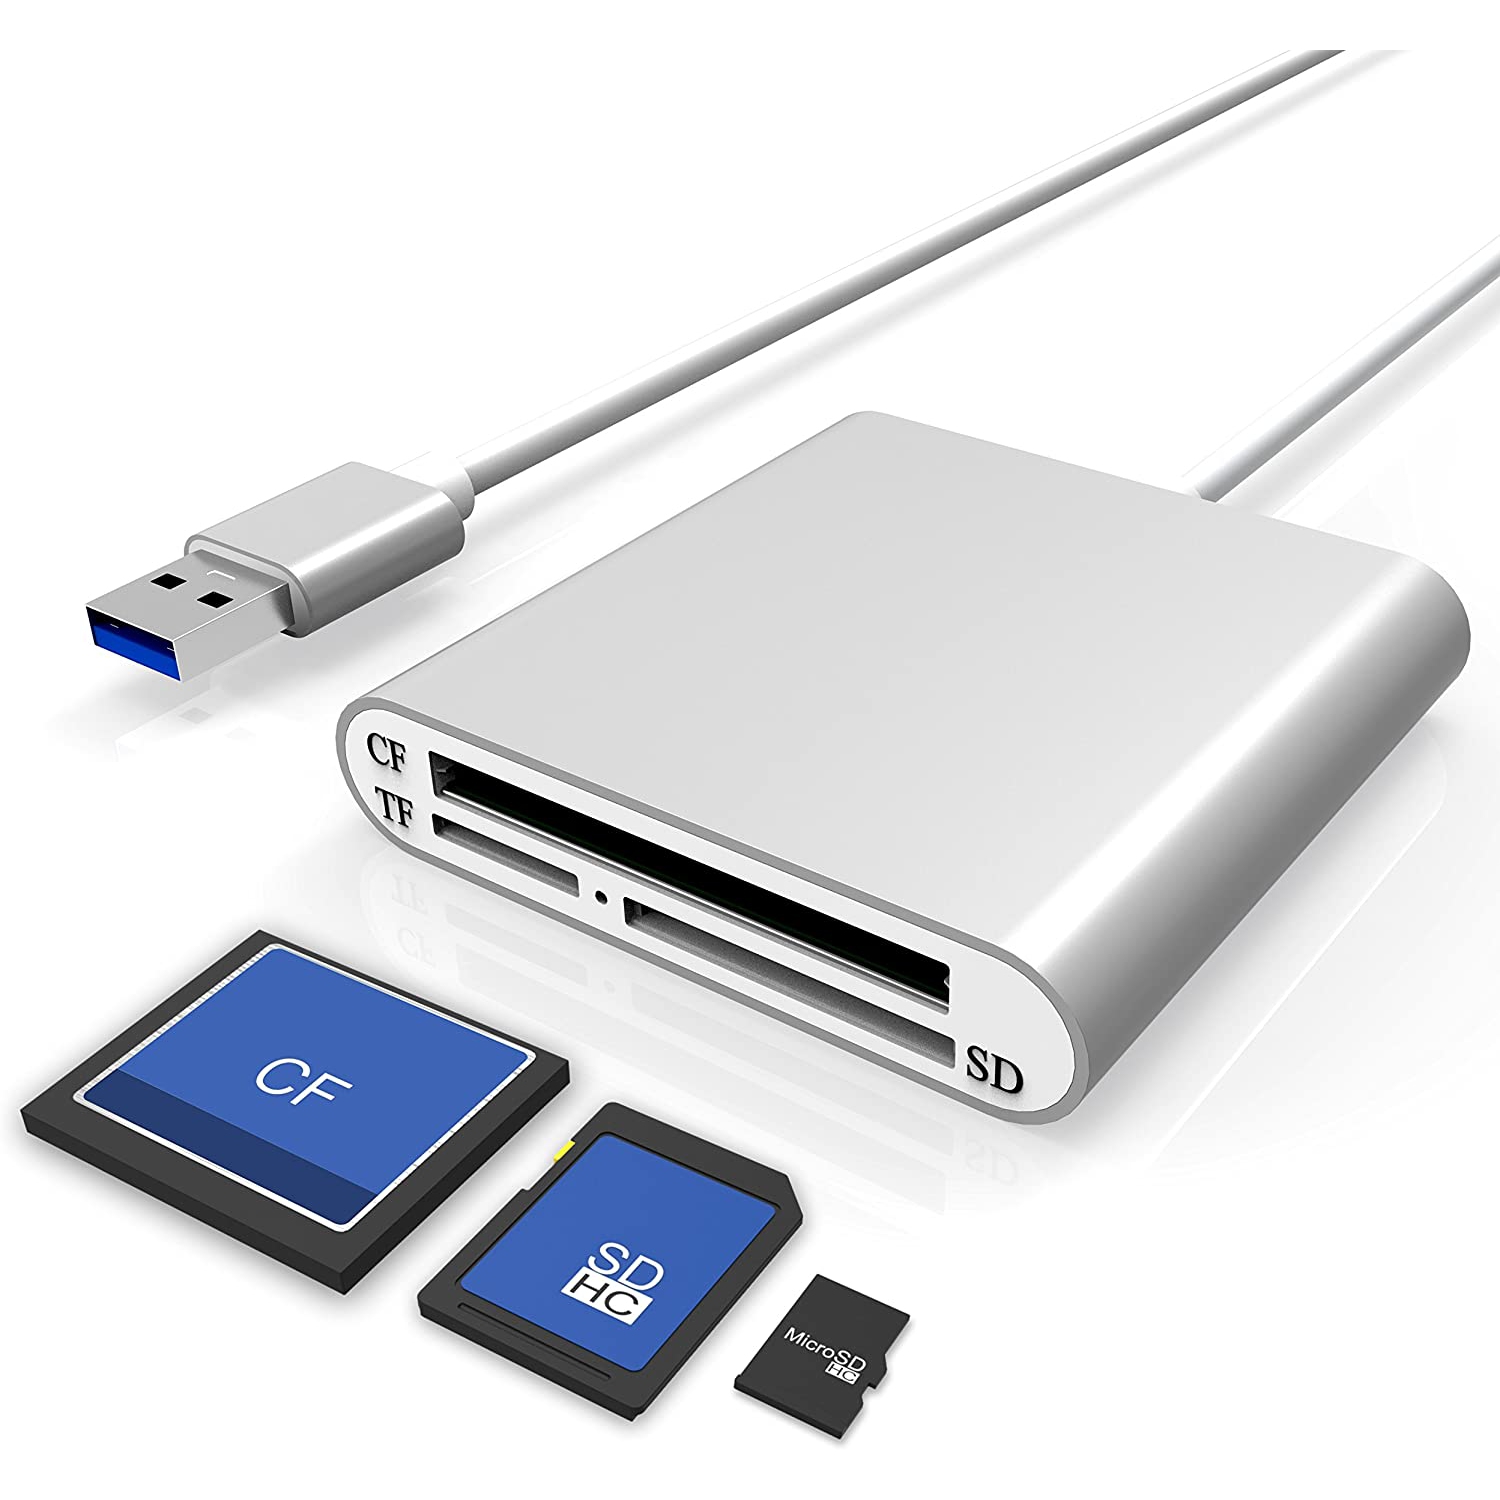 Aluminum Superspeed USB 3.0 Multi-in-1 3-Slot Card Reader for CF/SD/TF/Micro SD for iMac, MacBook Air, MacBook Pro, MacBook, Mac Mini, PCs and Laptops